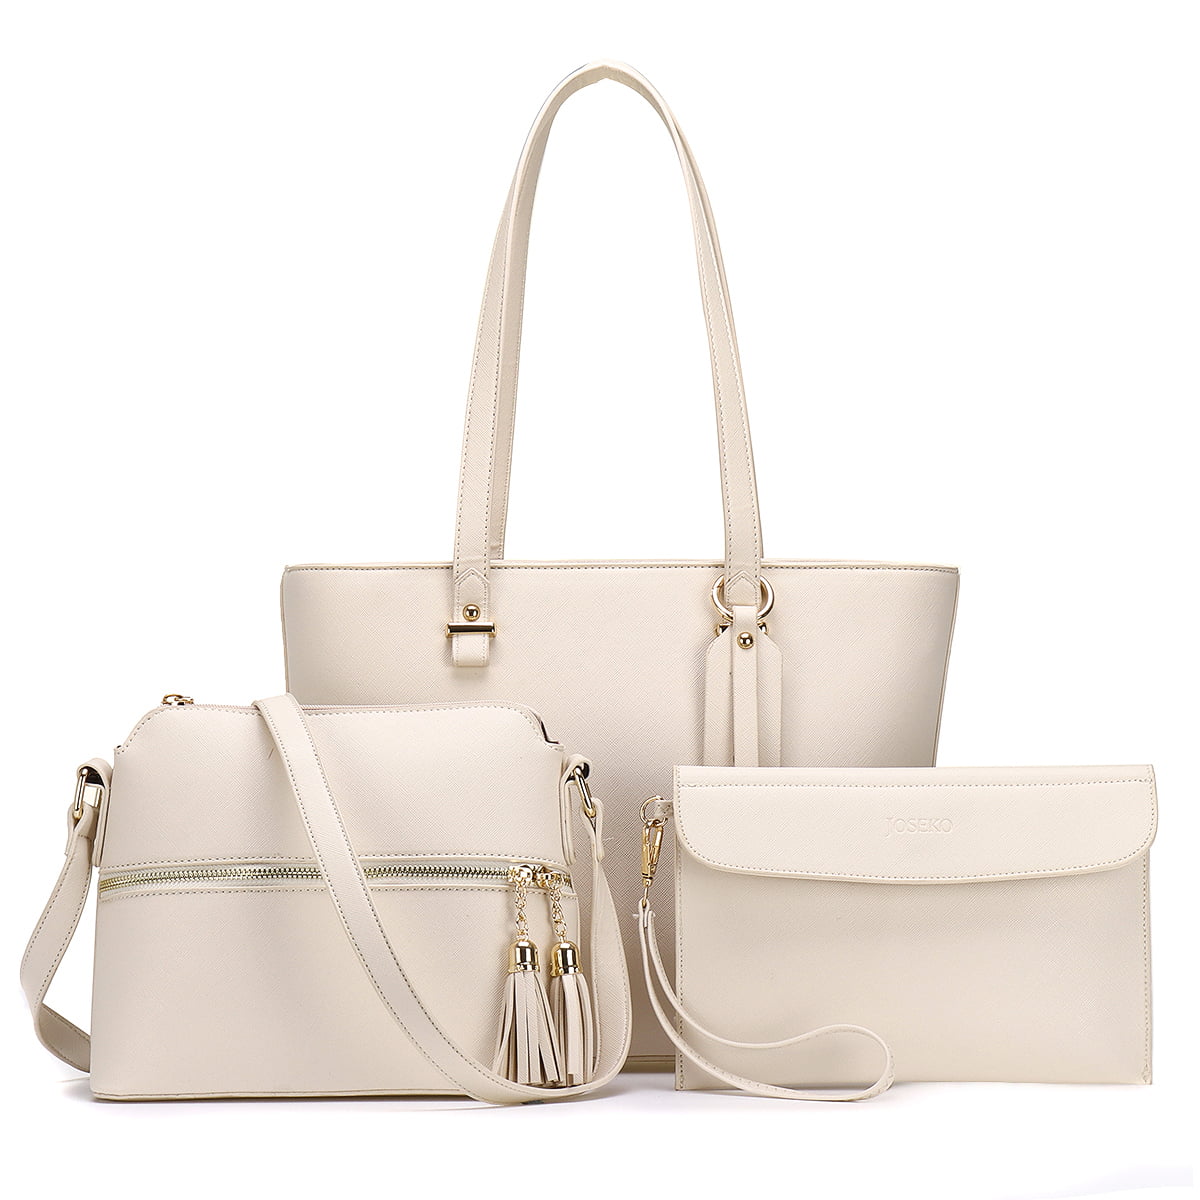 Handbags for Women Leather Purses Shoulder Bag 3 Pcs Large Fashion Tote Bag Set